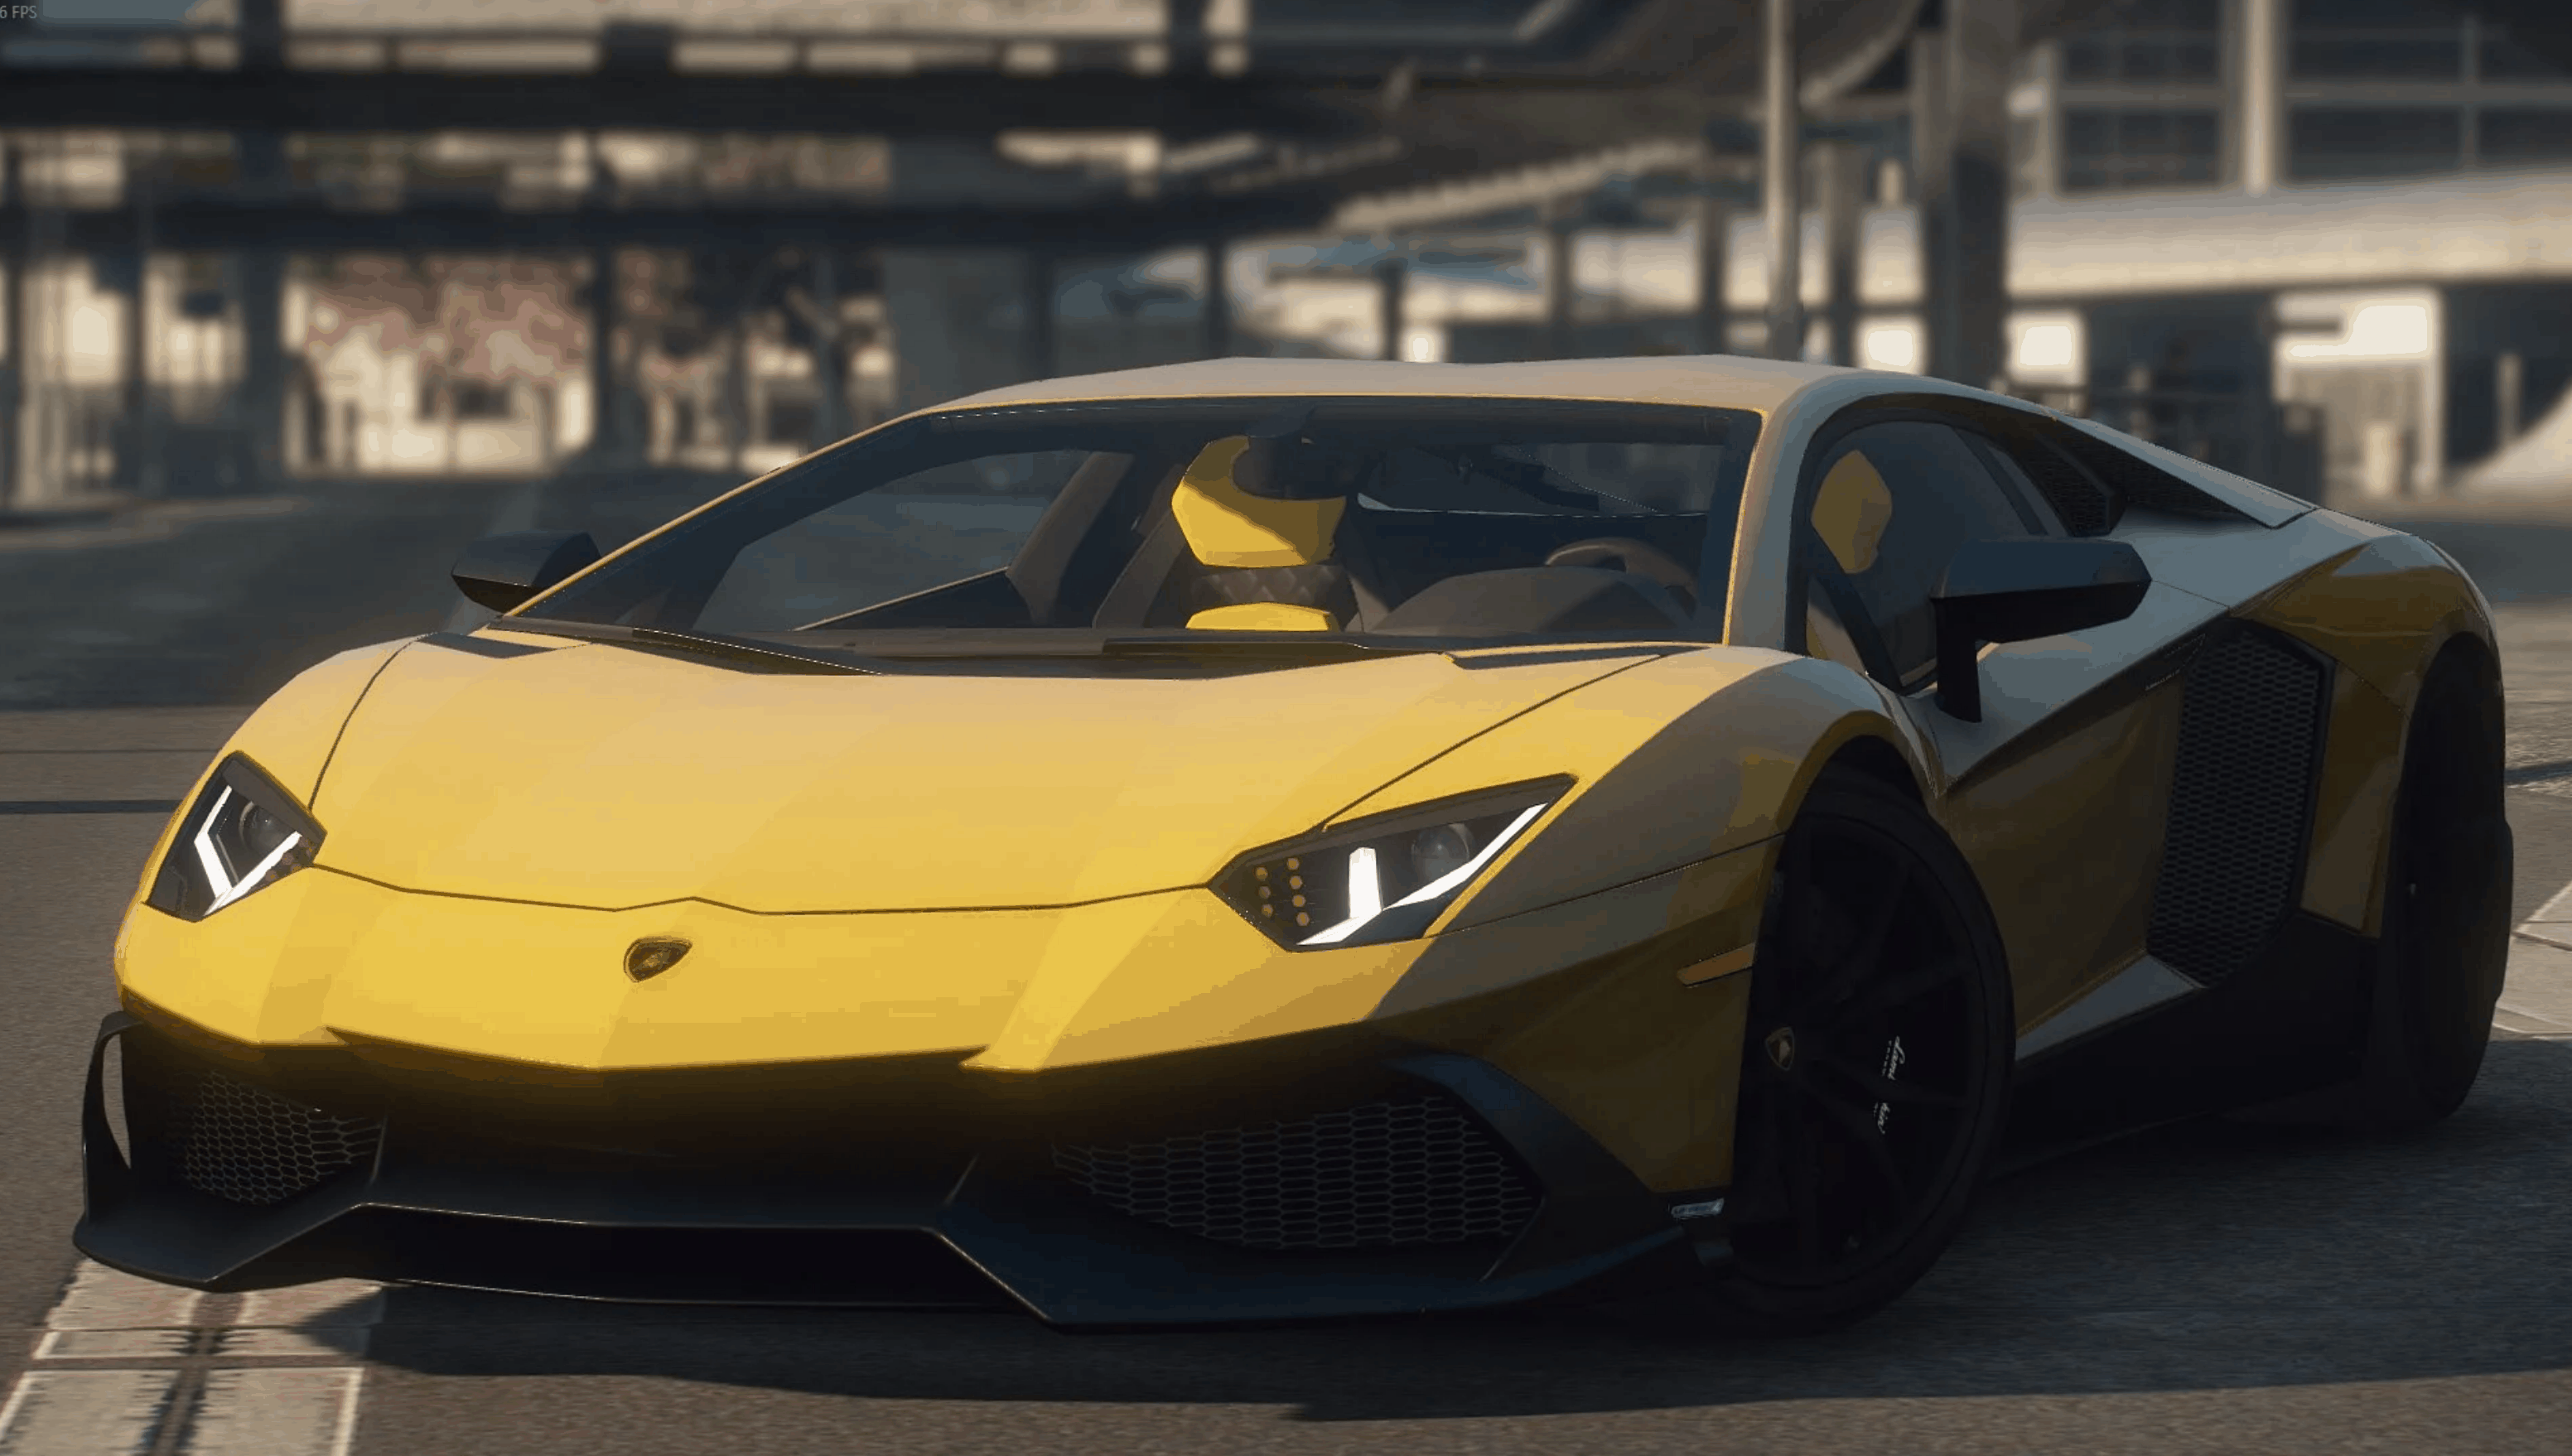 Lamborghini Aventador LP720-4 - GTA 5 Mod | Grand Theft Auto 5 Mod